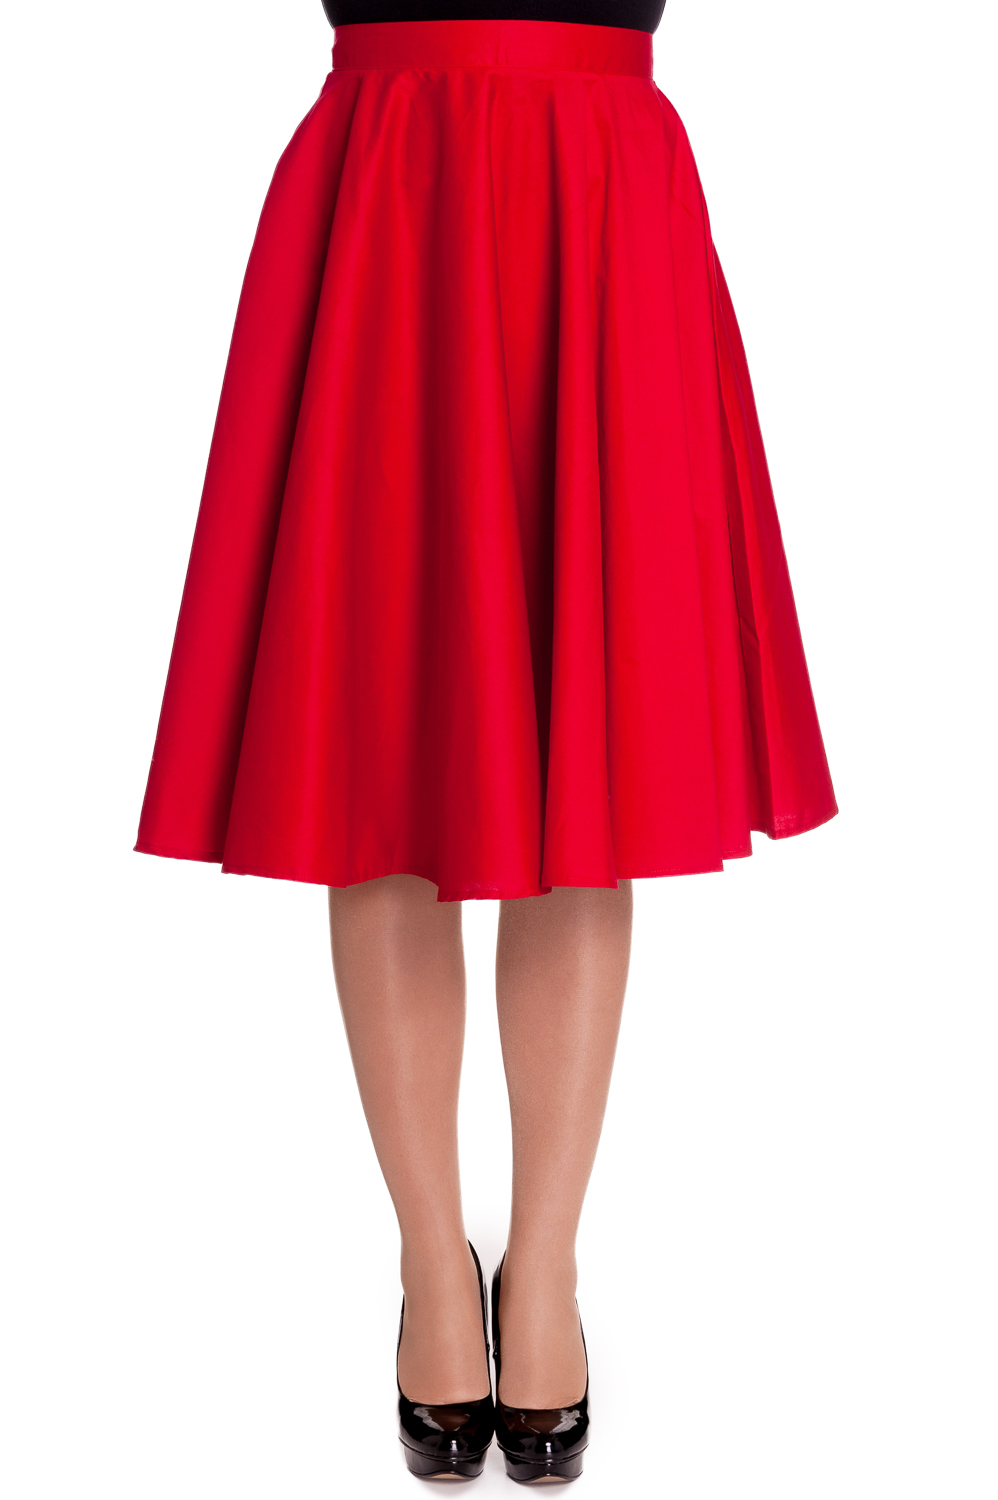 Hellbunny Paula kjol/skirt enfärga i flera färger  stl 2XL-5XL